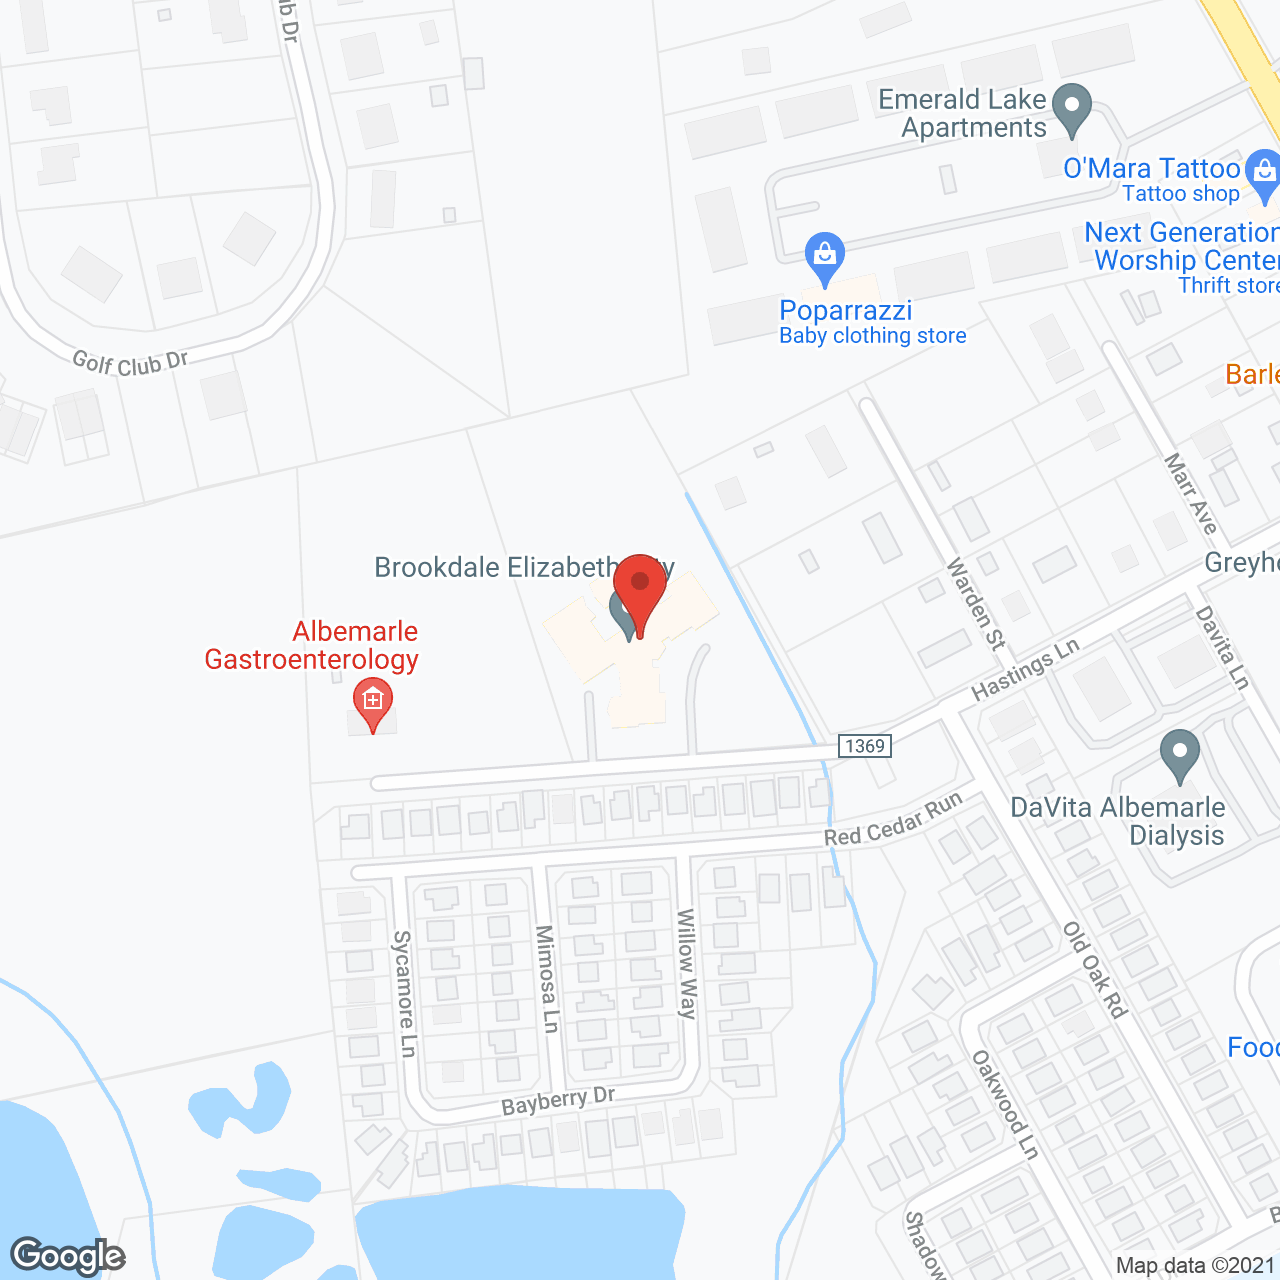 Brookdale Elizabeth City in google map